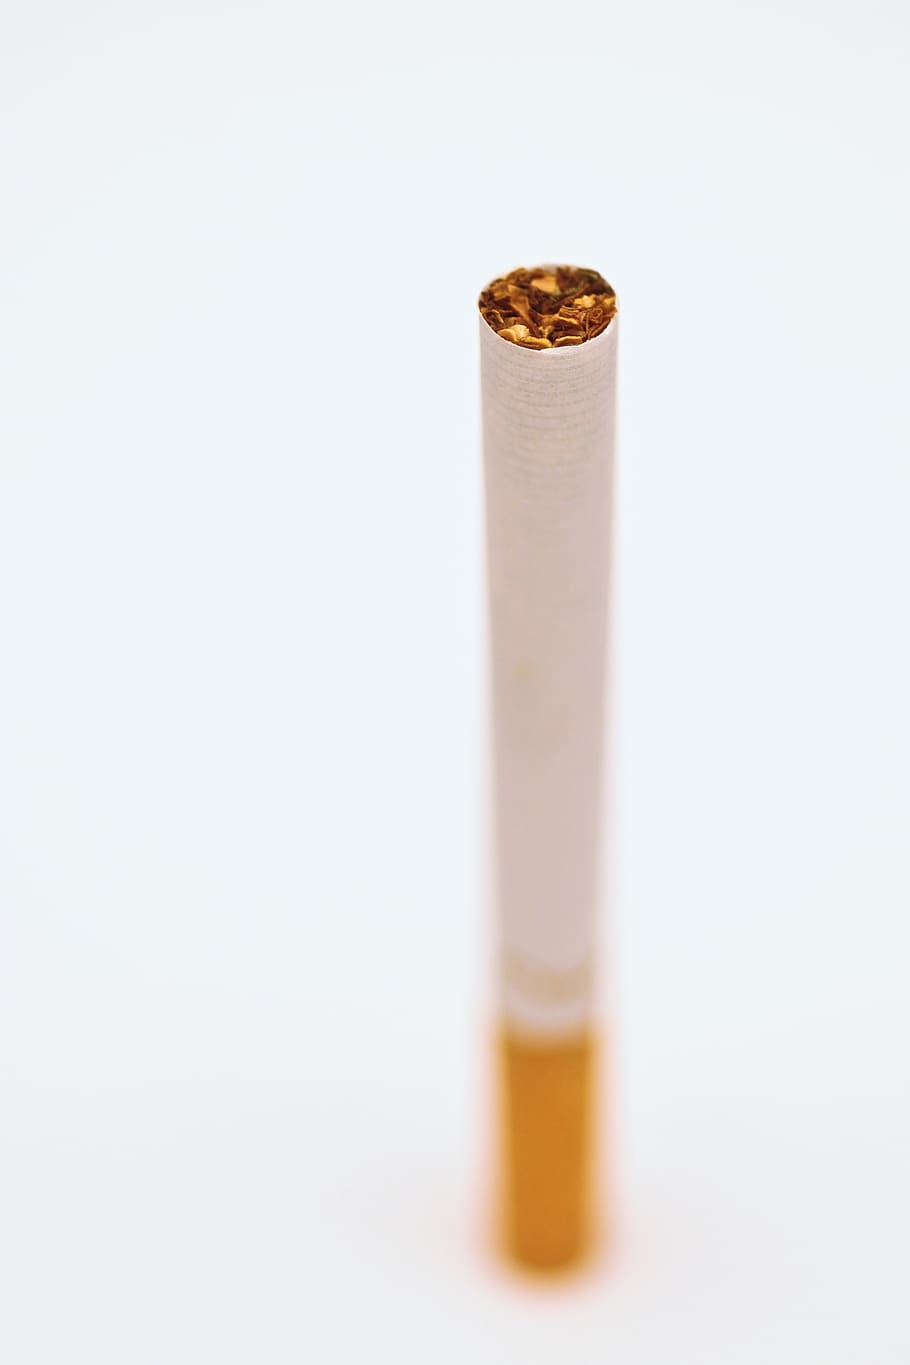 cigarette, tobacco, smoke, white background, studio shot, pencil, indoors, single object, eraser, close-up